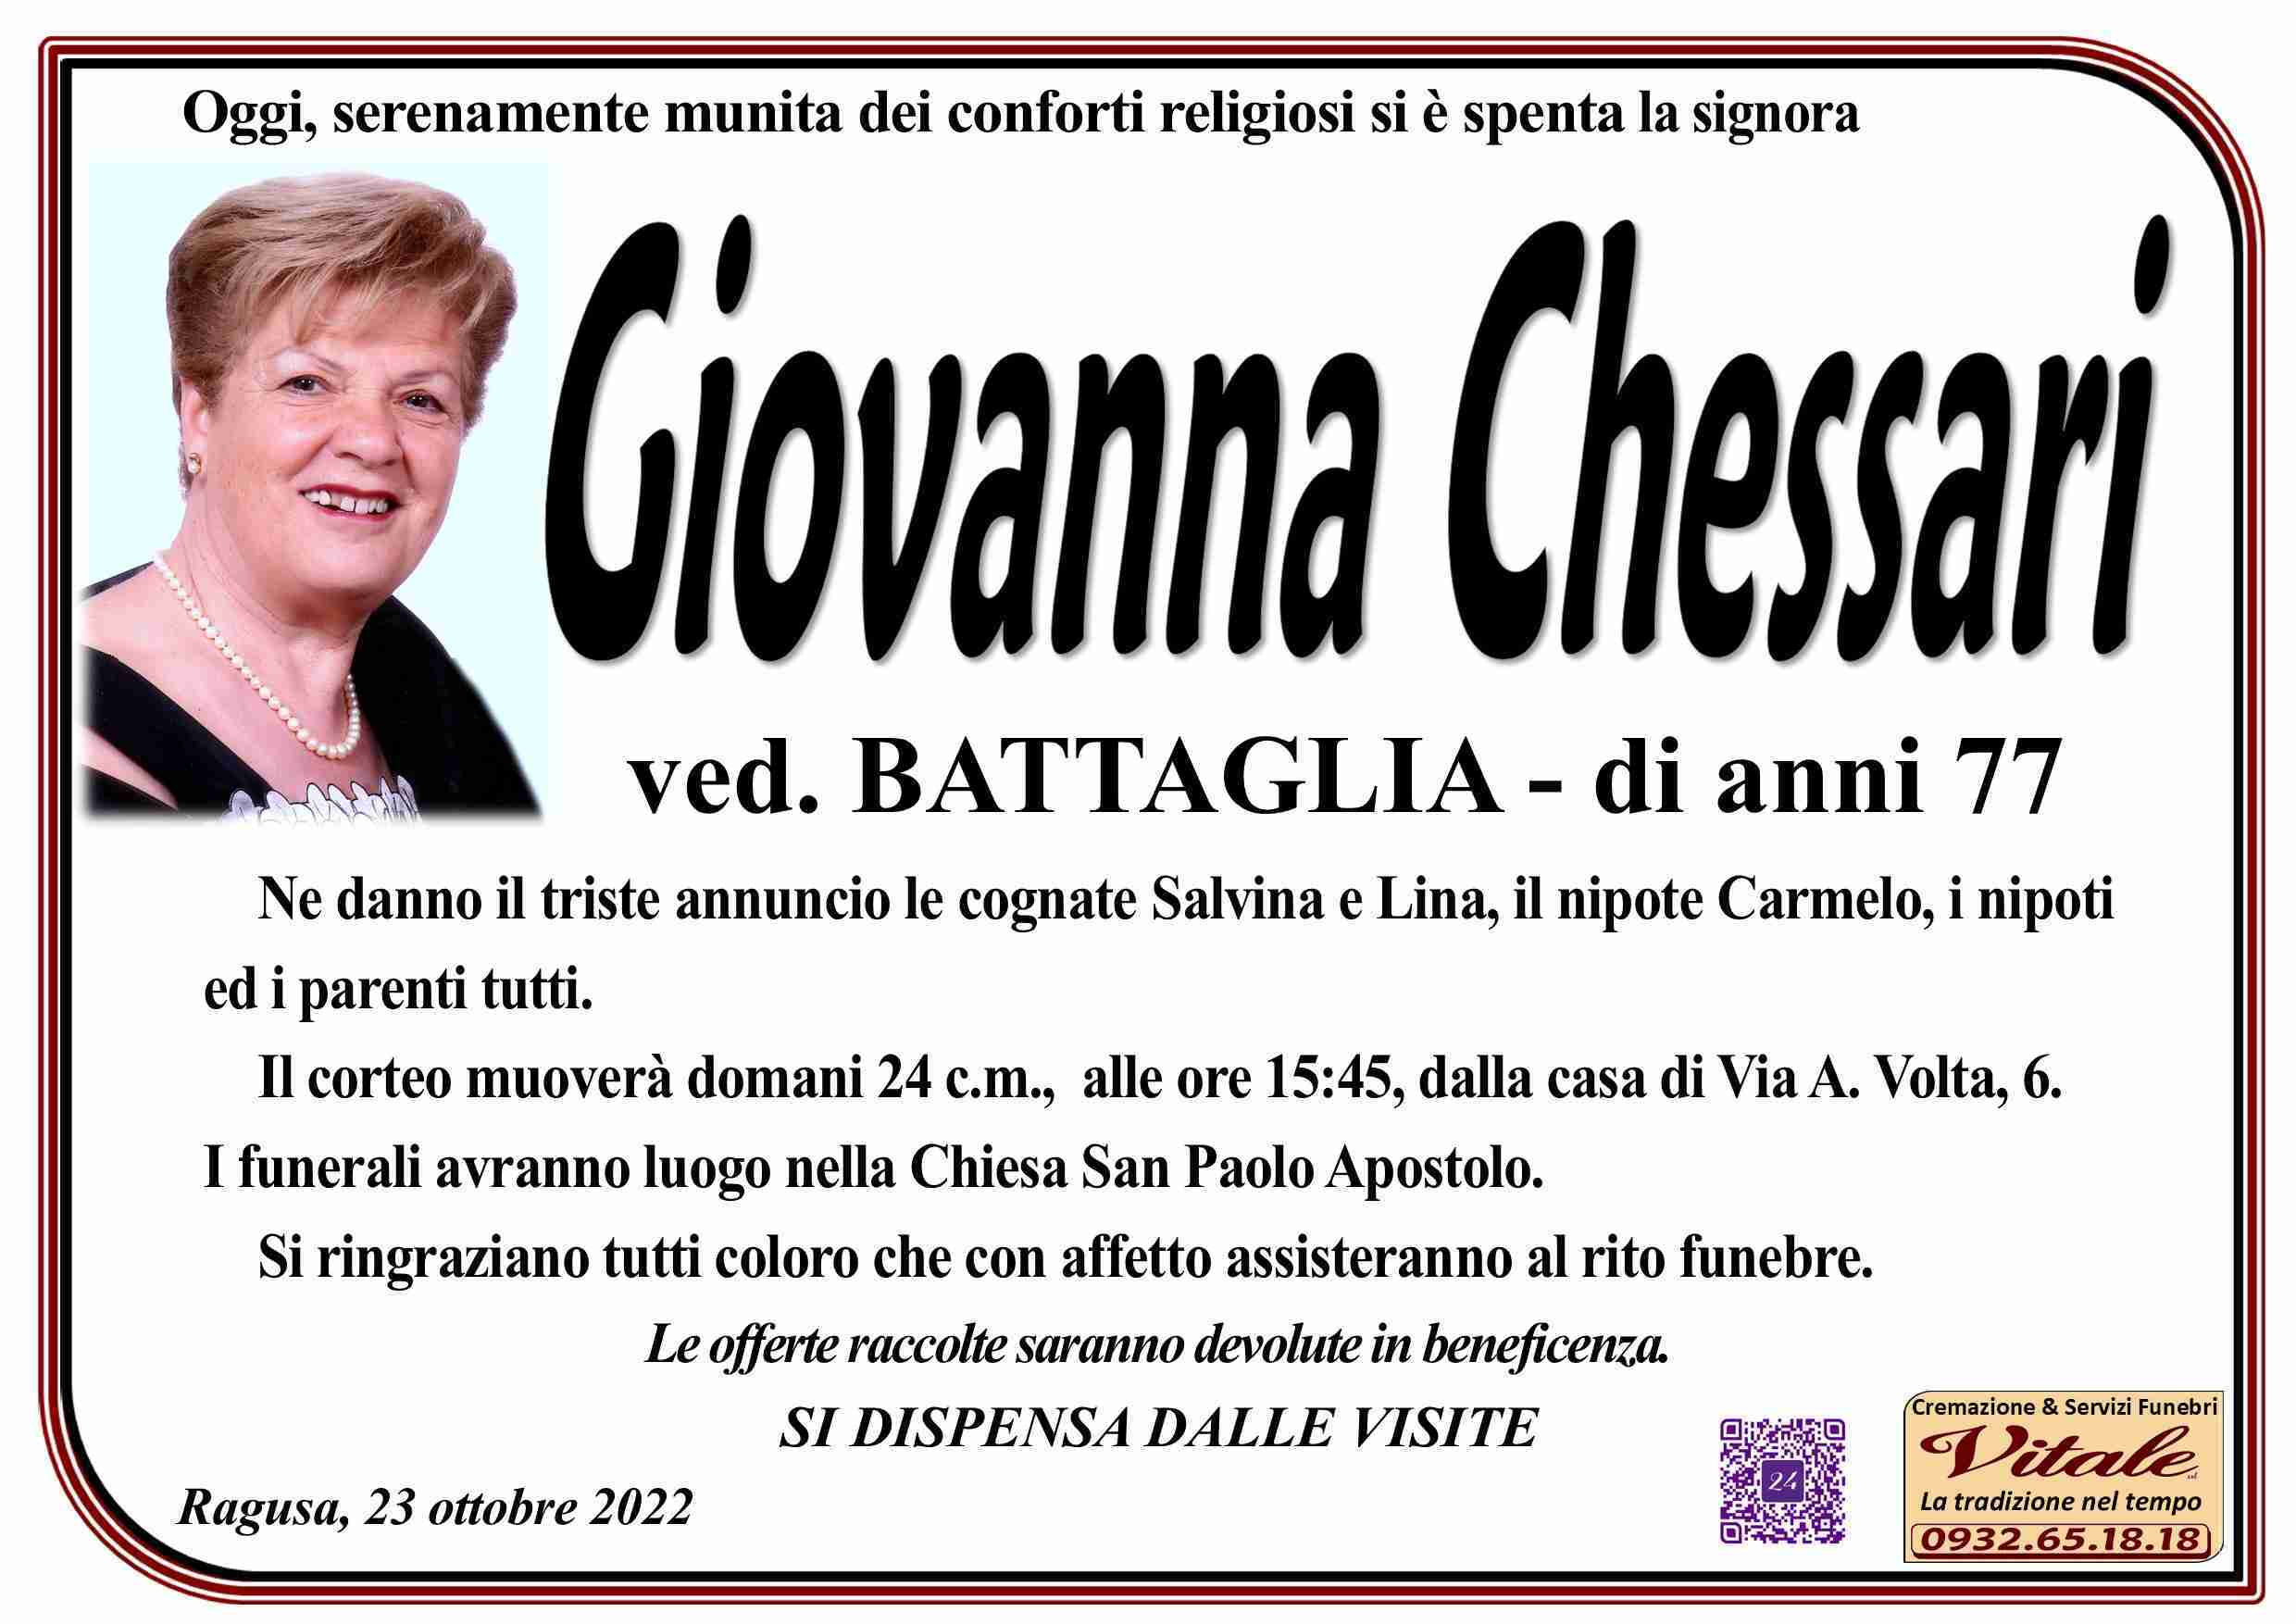 Giovanna Chessari